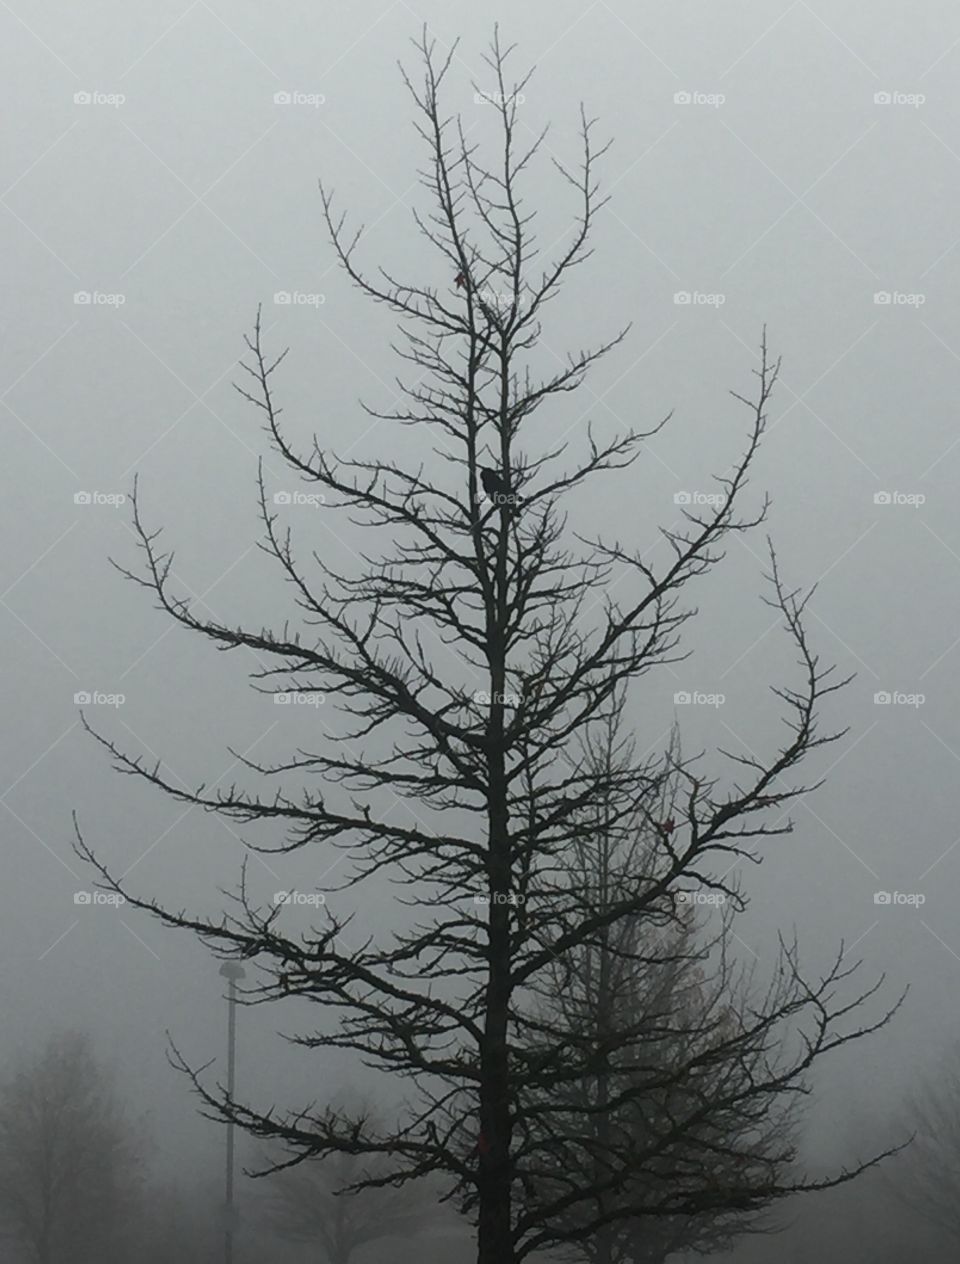 Winter tree in fog with bird